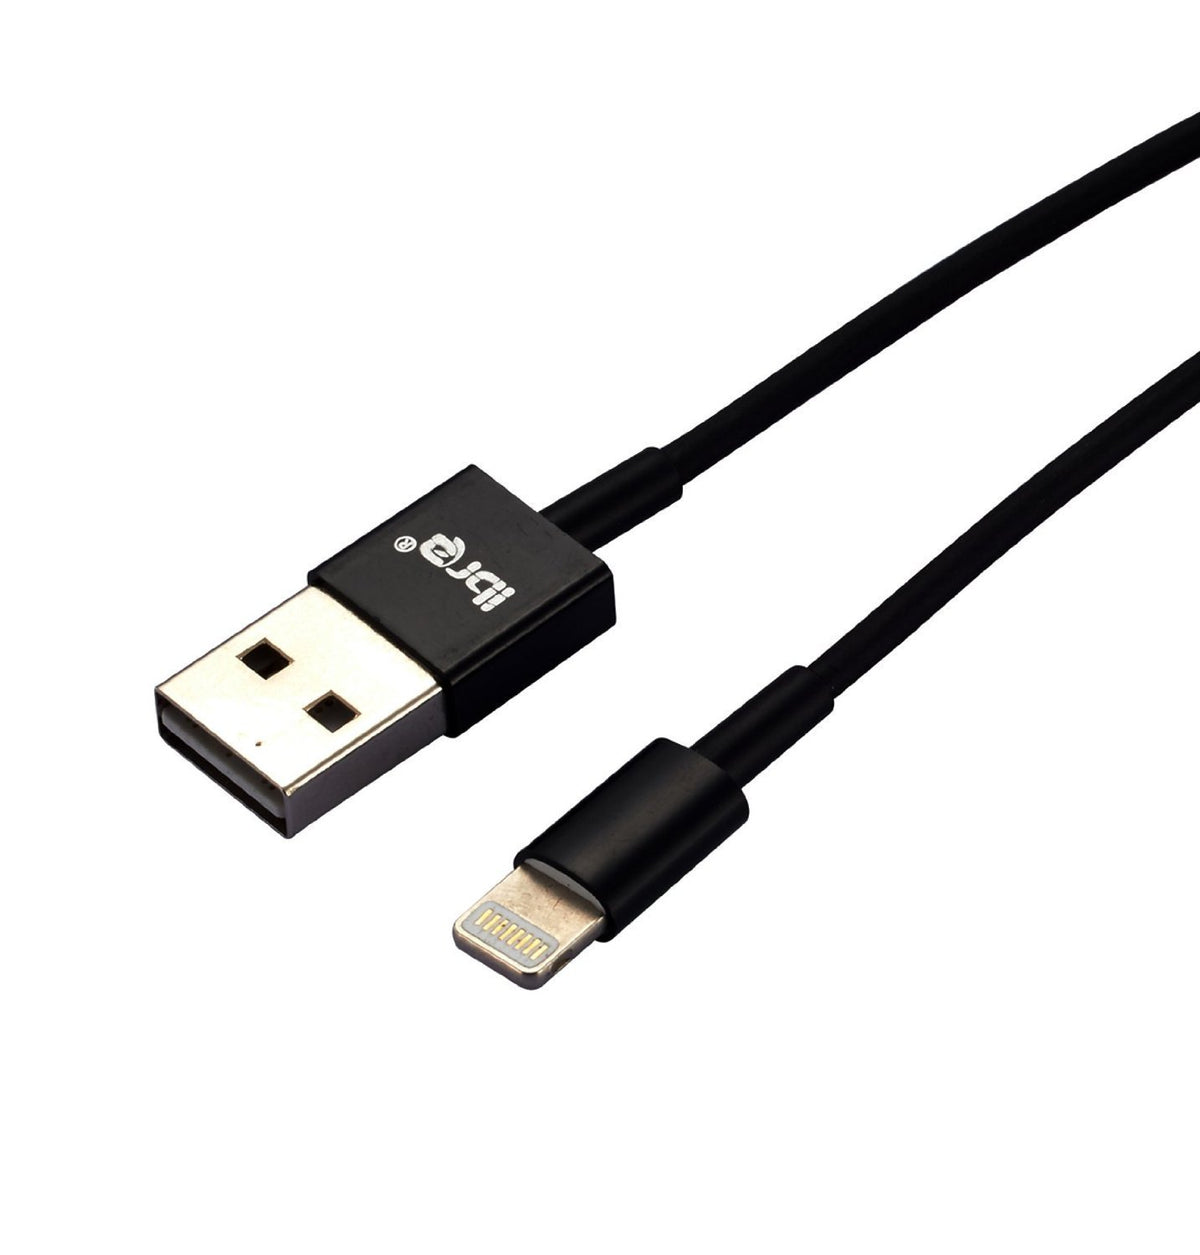 IBRA Lightning to USB Cable with 3M for iPhone 6 6Plus 5s 5c 5, iPad Air Air2 mini mini2 mini3, iPad 4th Gen, iPod touch 5th Gen, and iPod nano 7th Gen [BLACK]